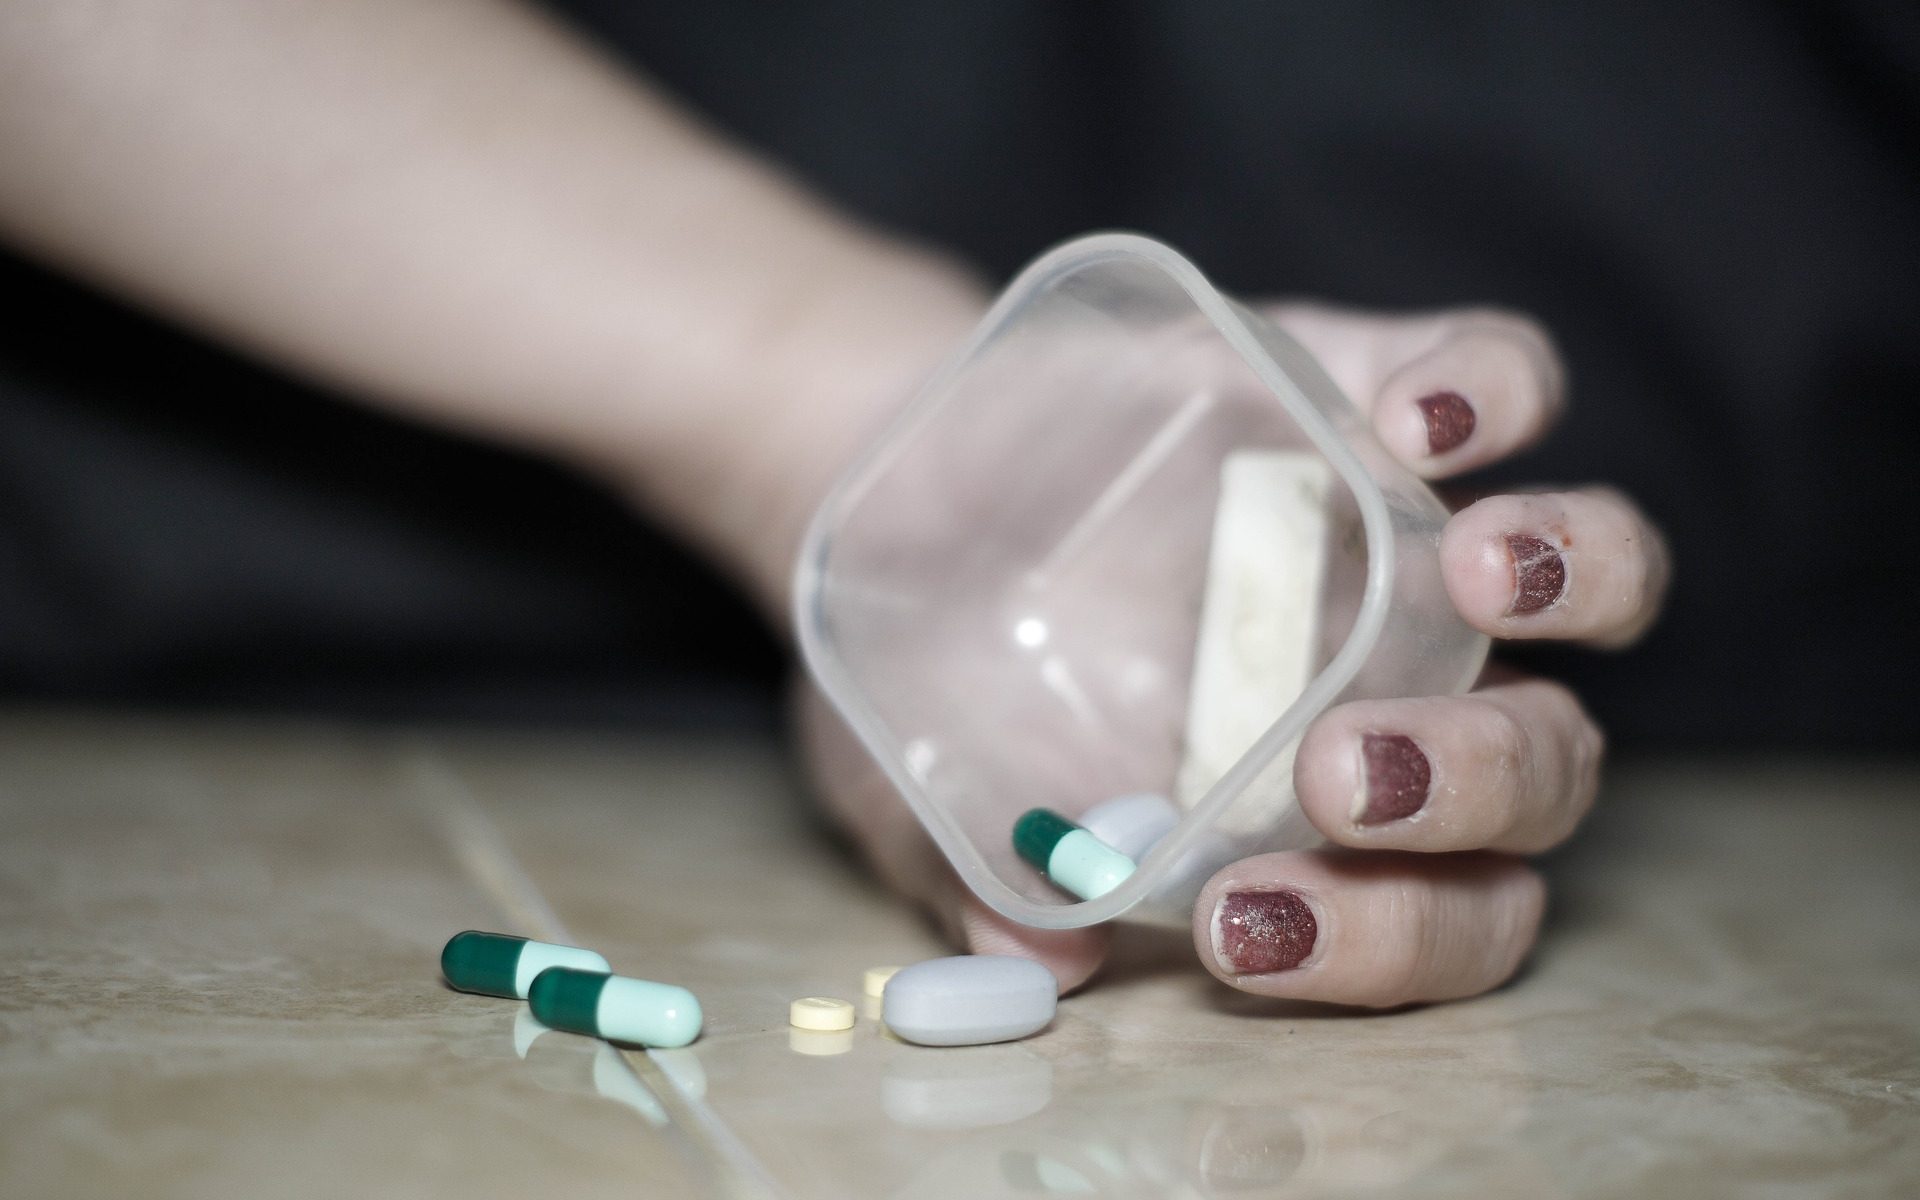 Stayin Alive Tour - Opioid Epidemic - Pills